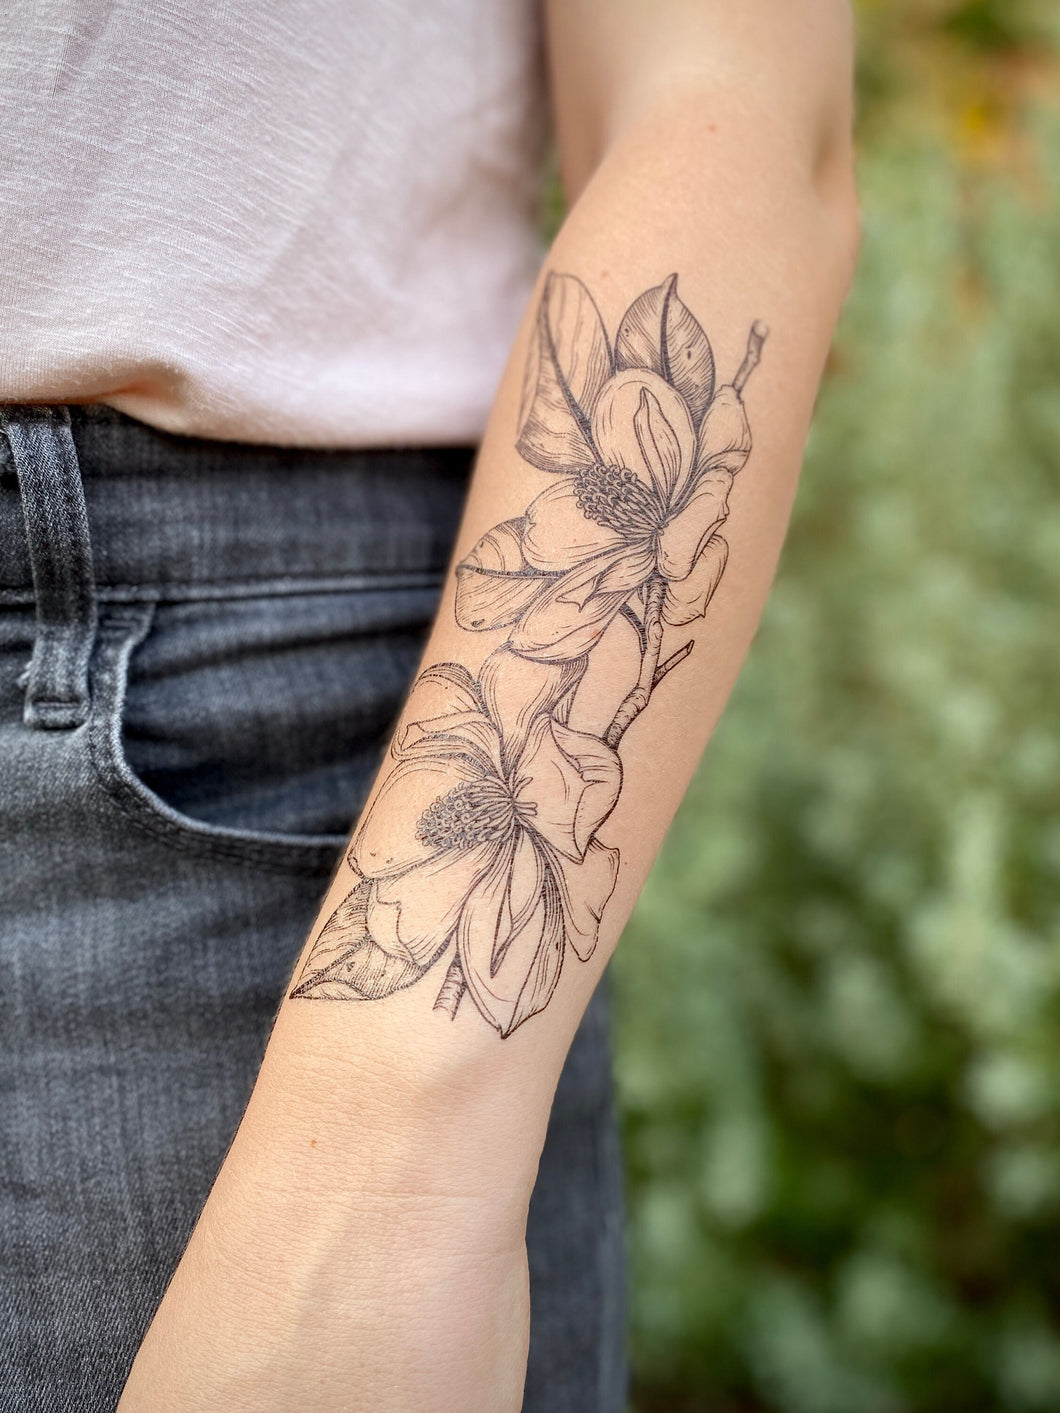 The Spring Flower Tattoo | Tattoo Ink Master